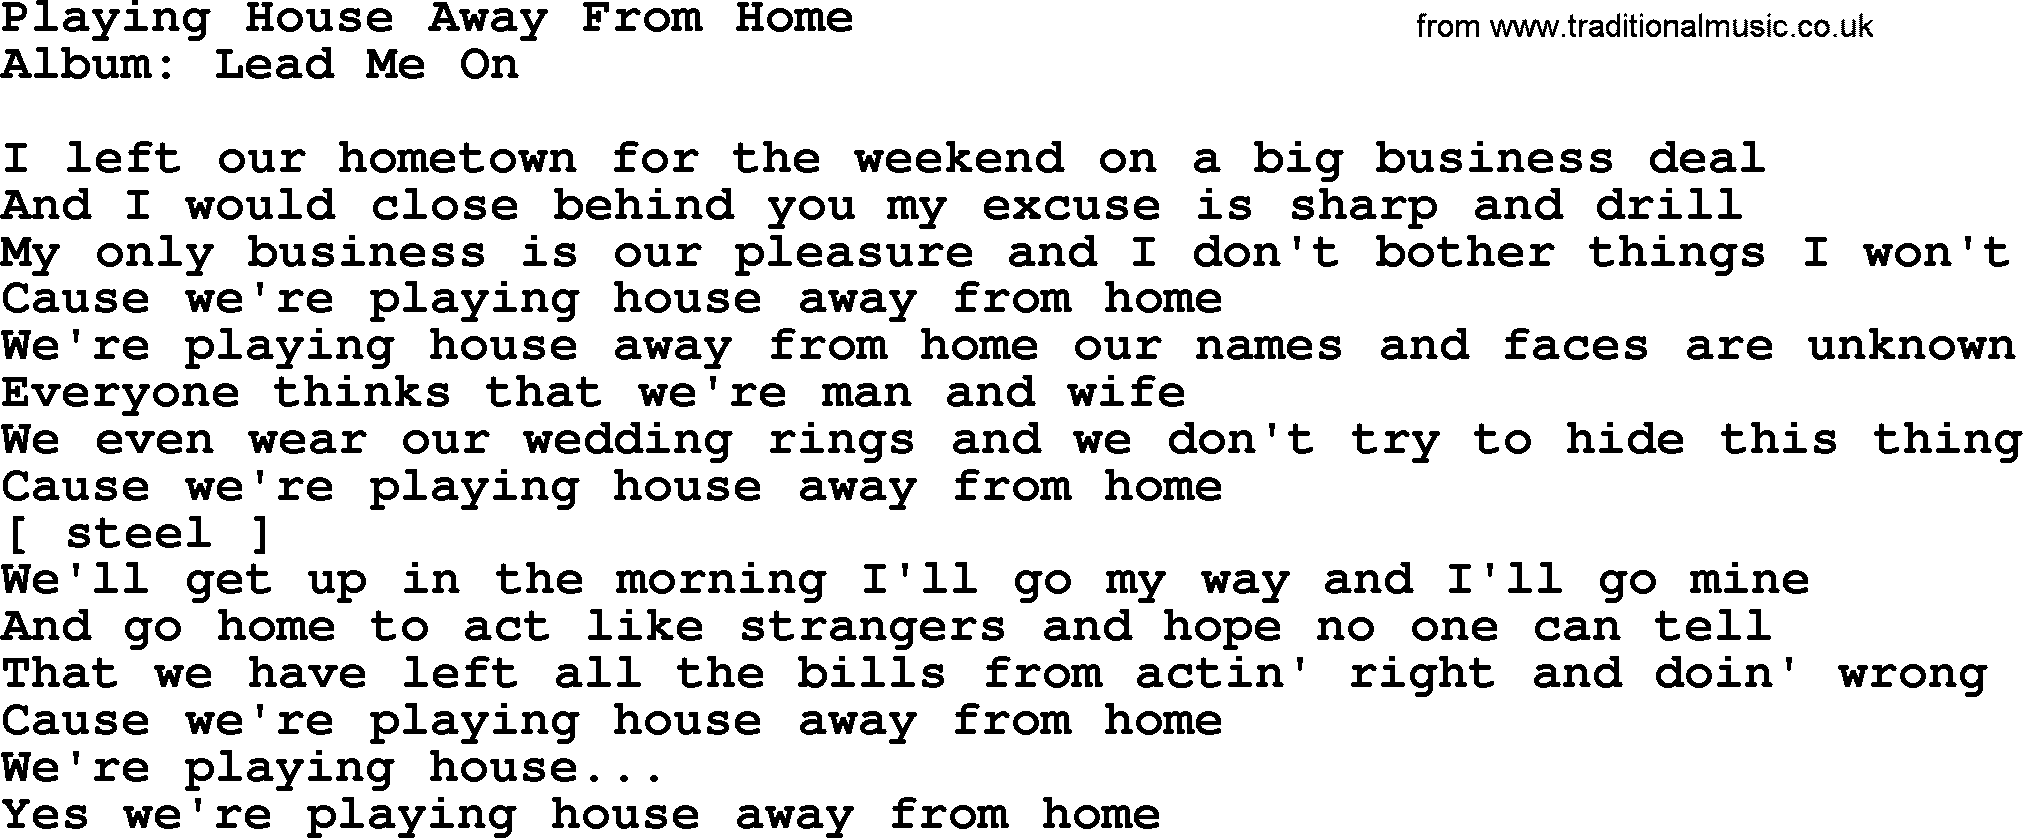 Loretta Lynn song: Playing House Away From Home lyrics